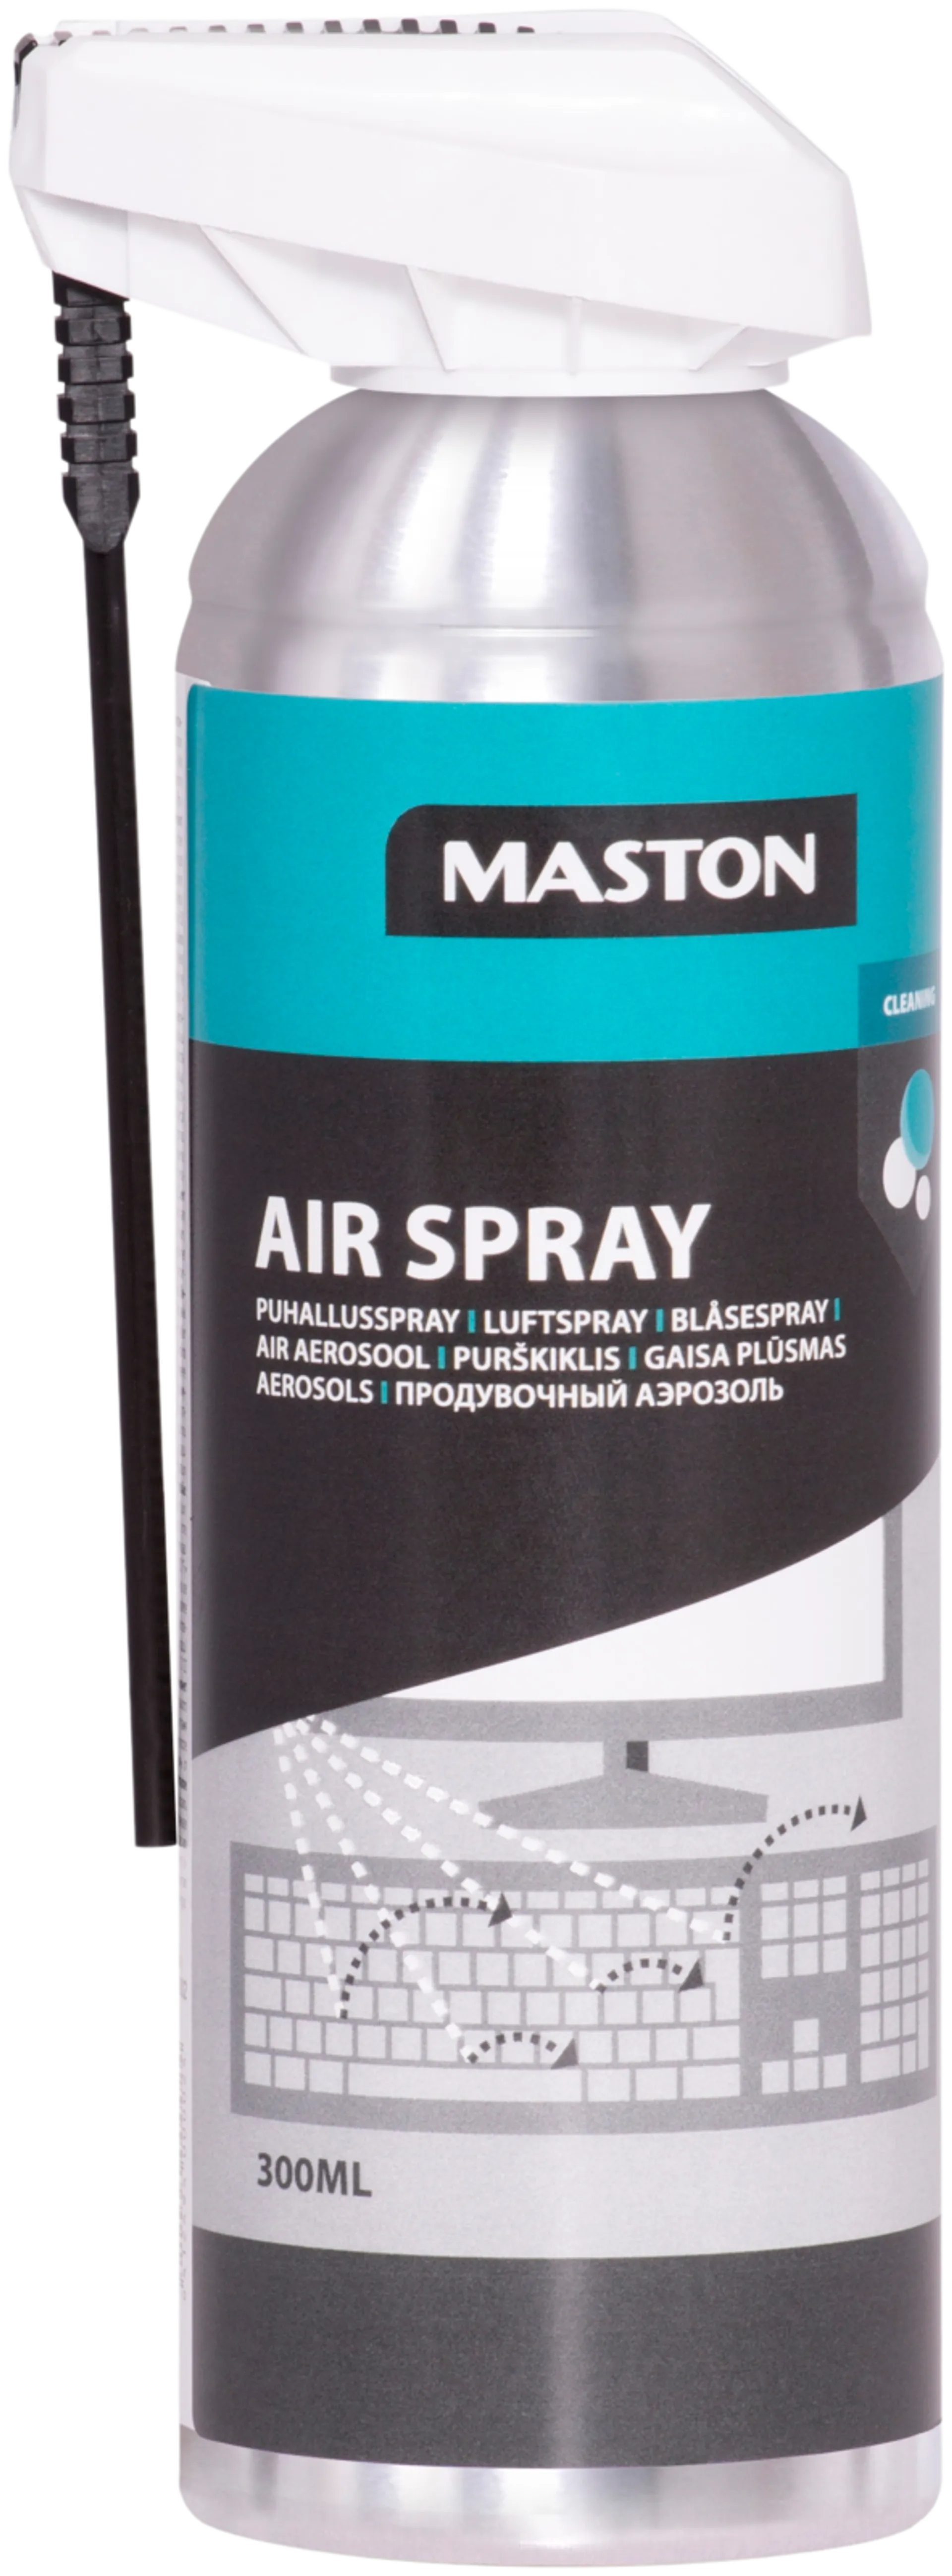 Maston Air-spray puhallusspray 300ml